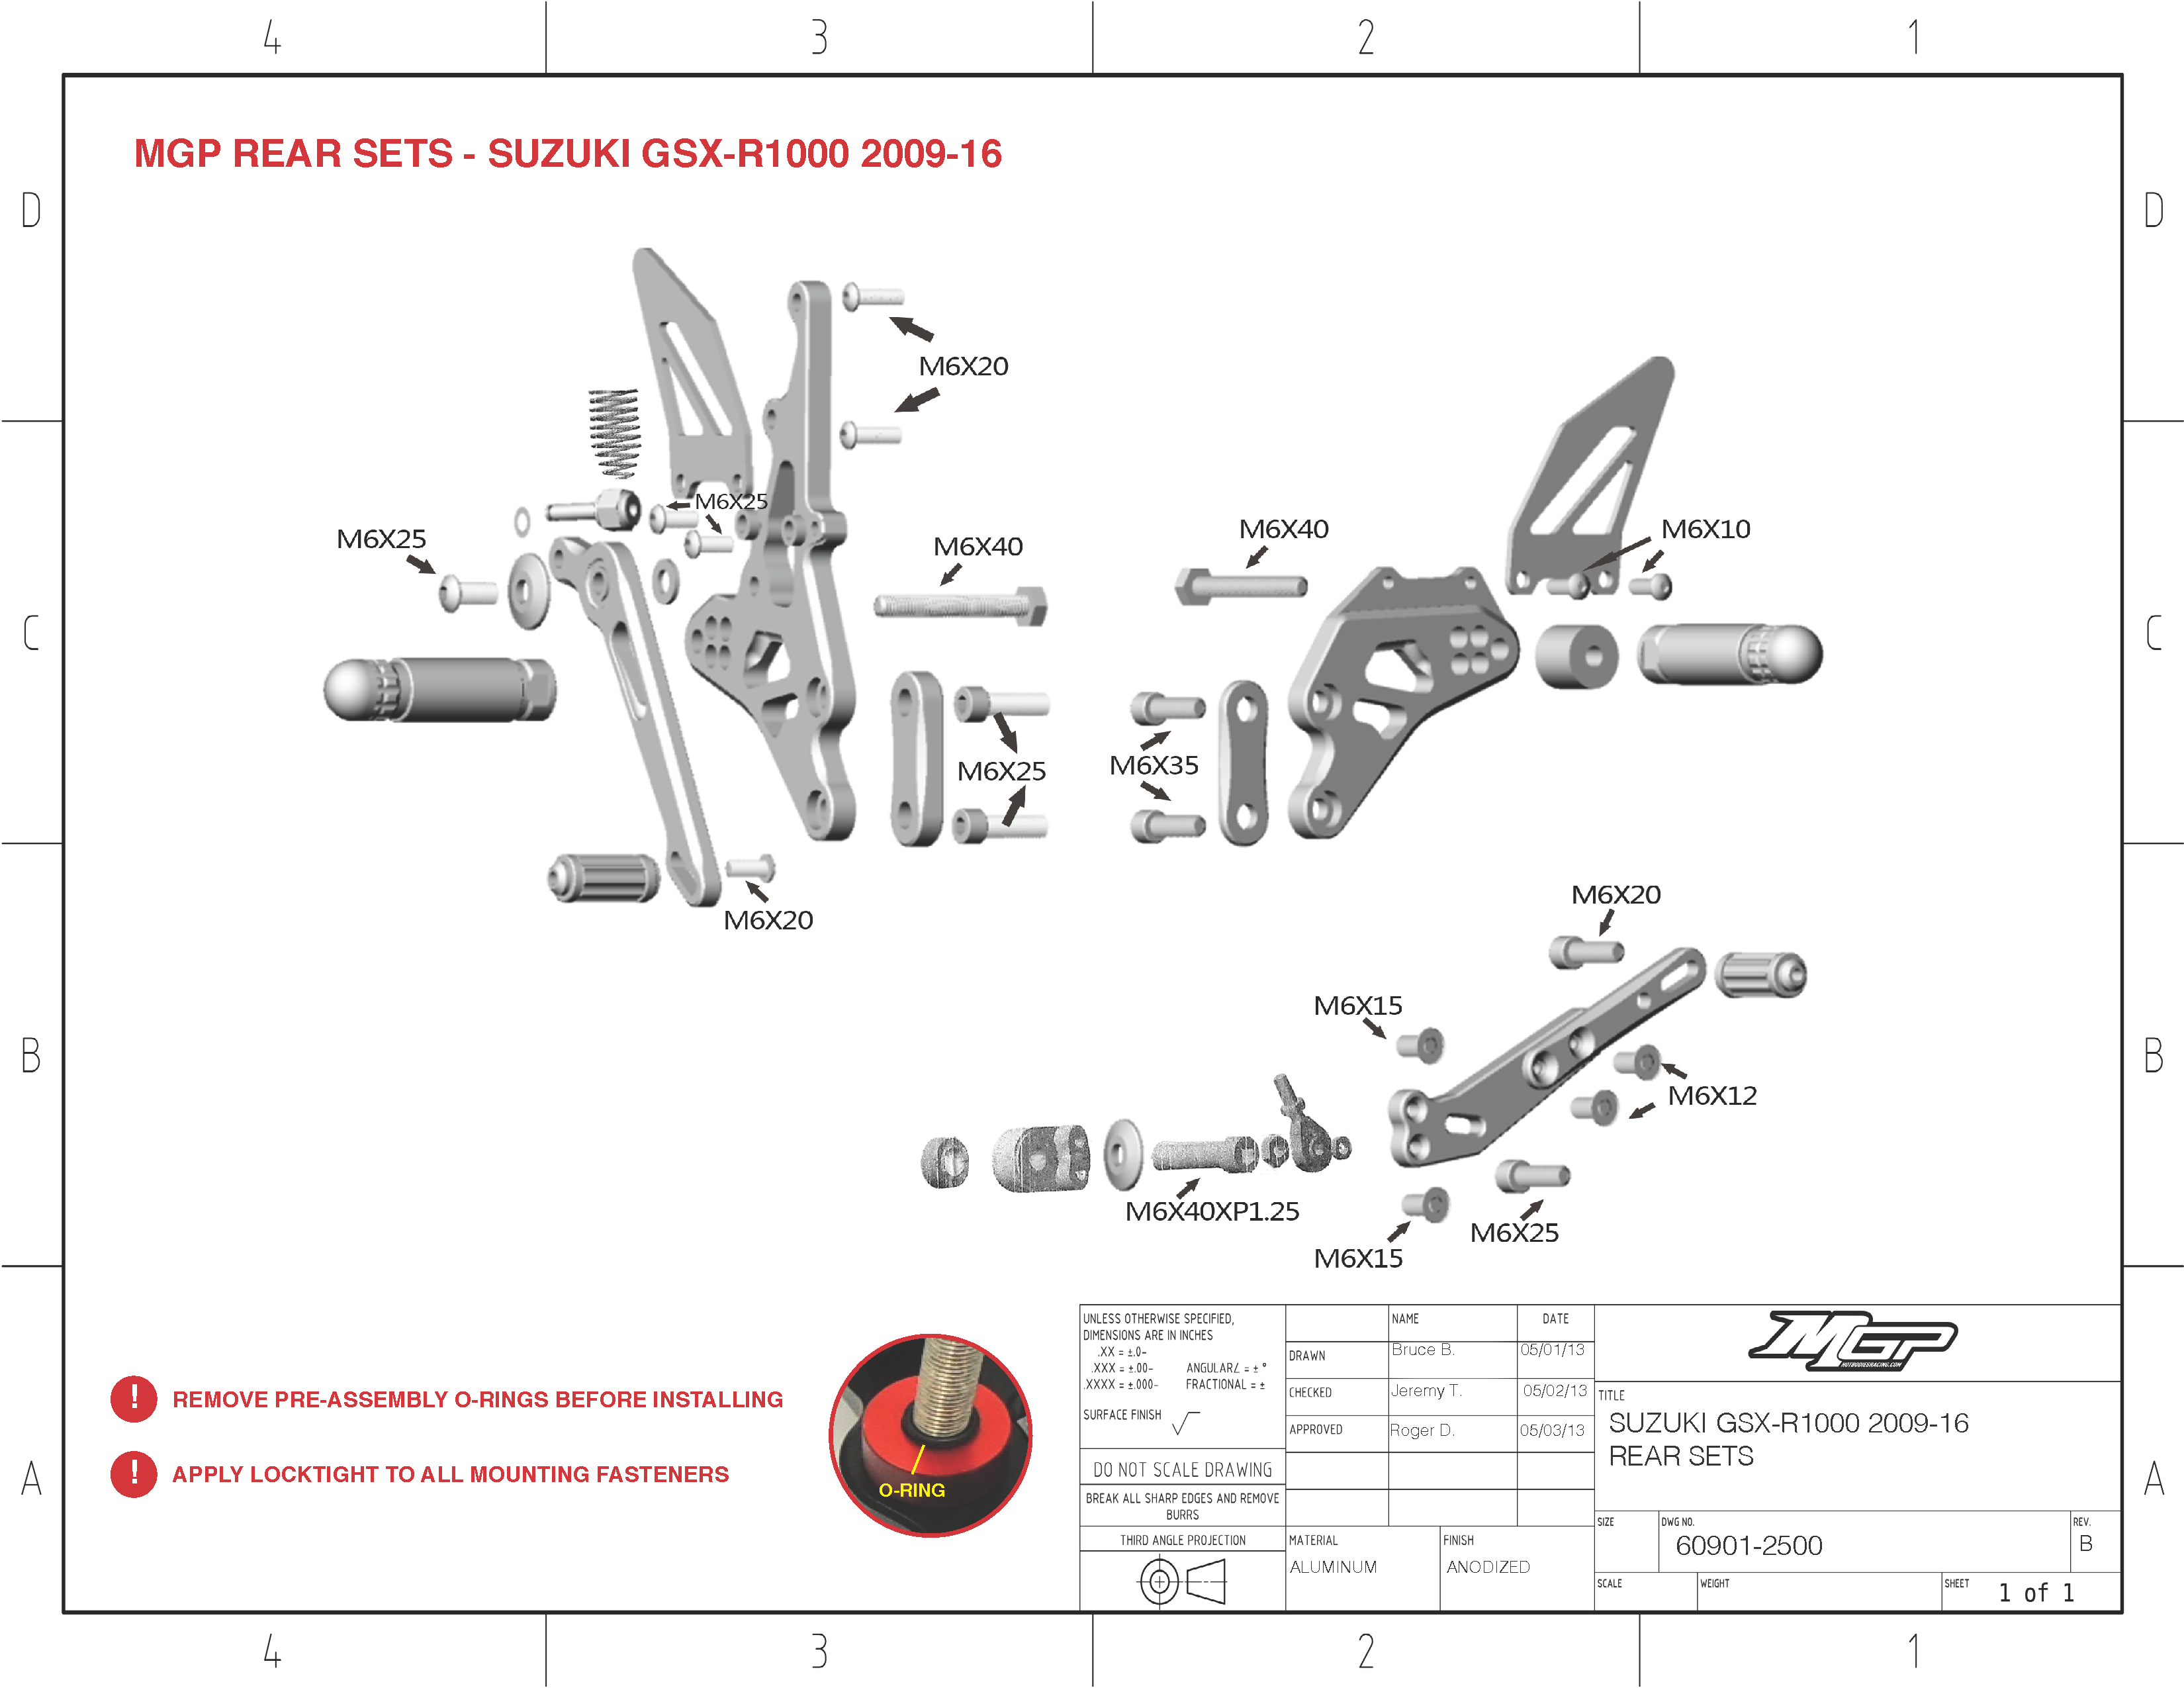 

GSX-R1000 2009-16 MGP Rear Sets Installation

